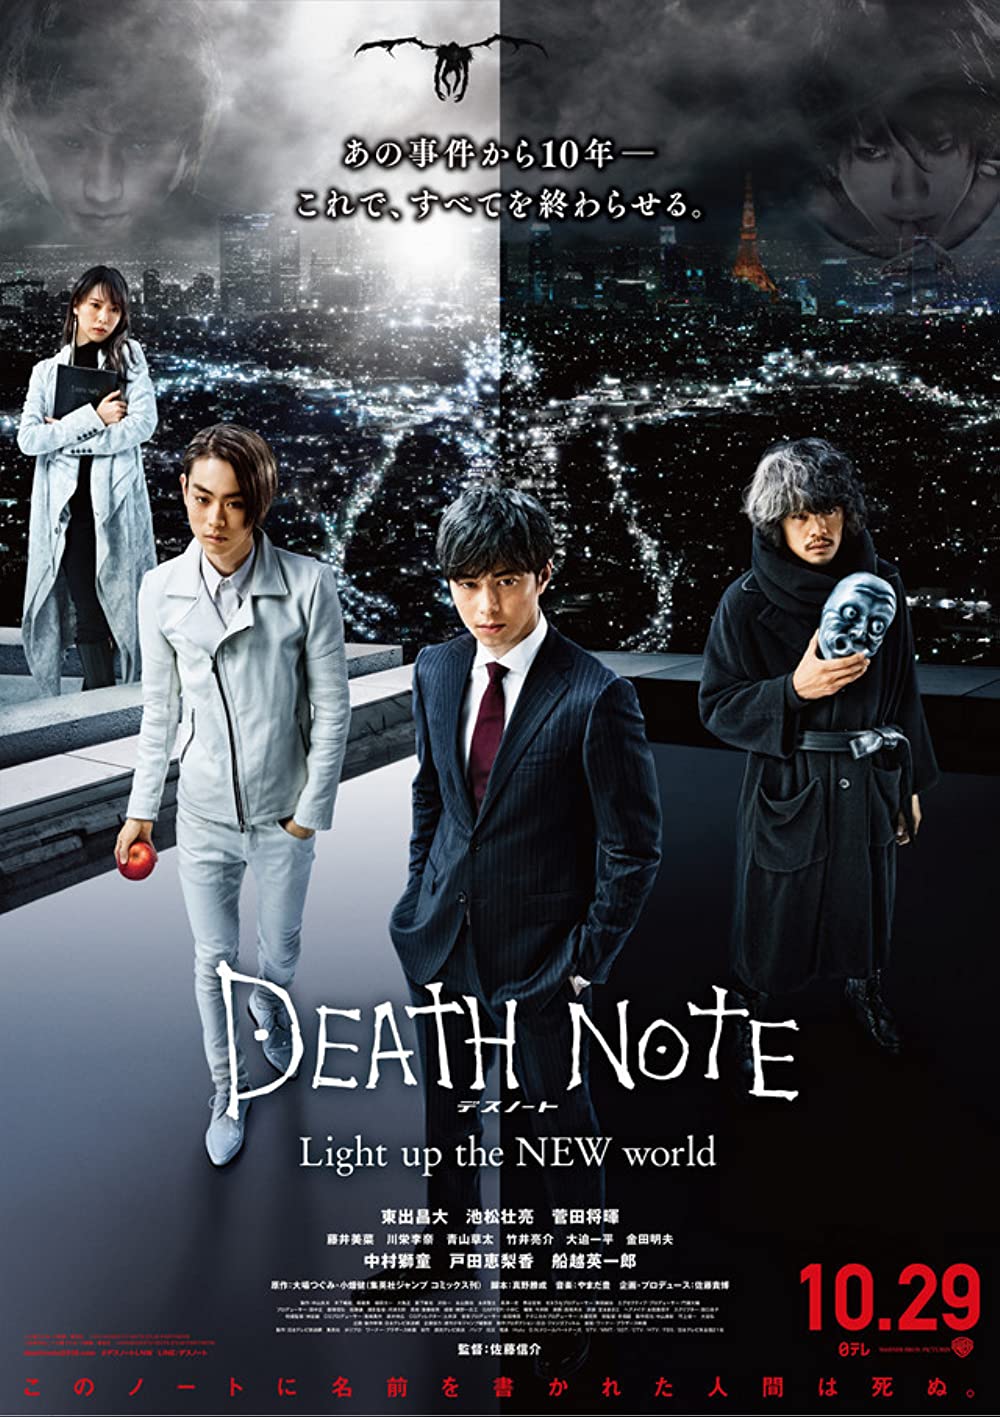 Filmbeschreibung zu Death Note - Desu nôto: Light Up the New World